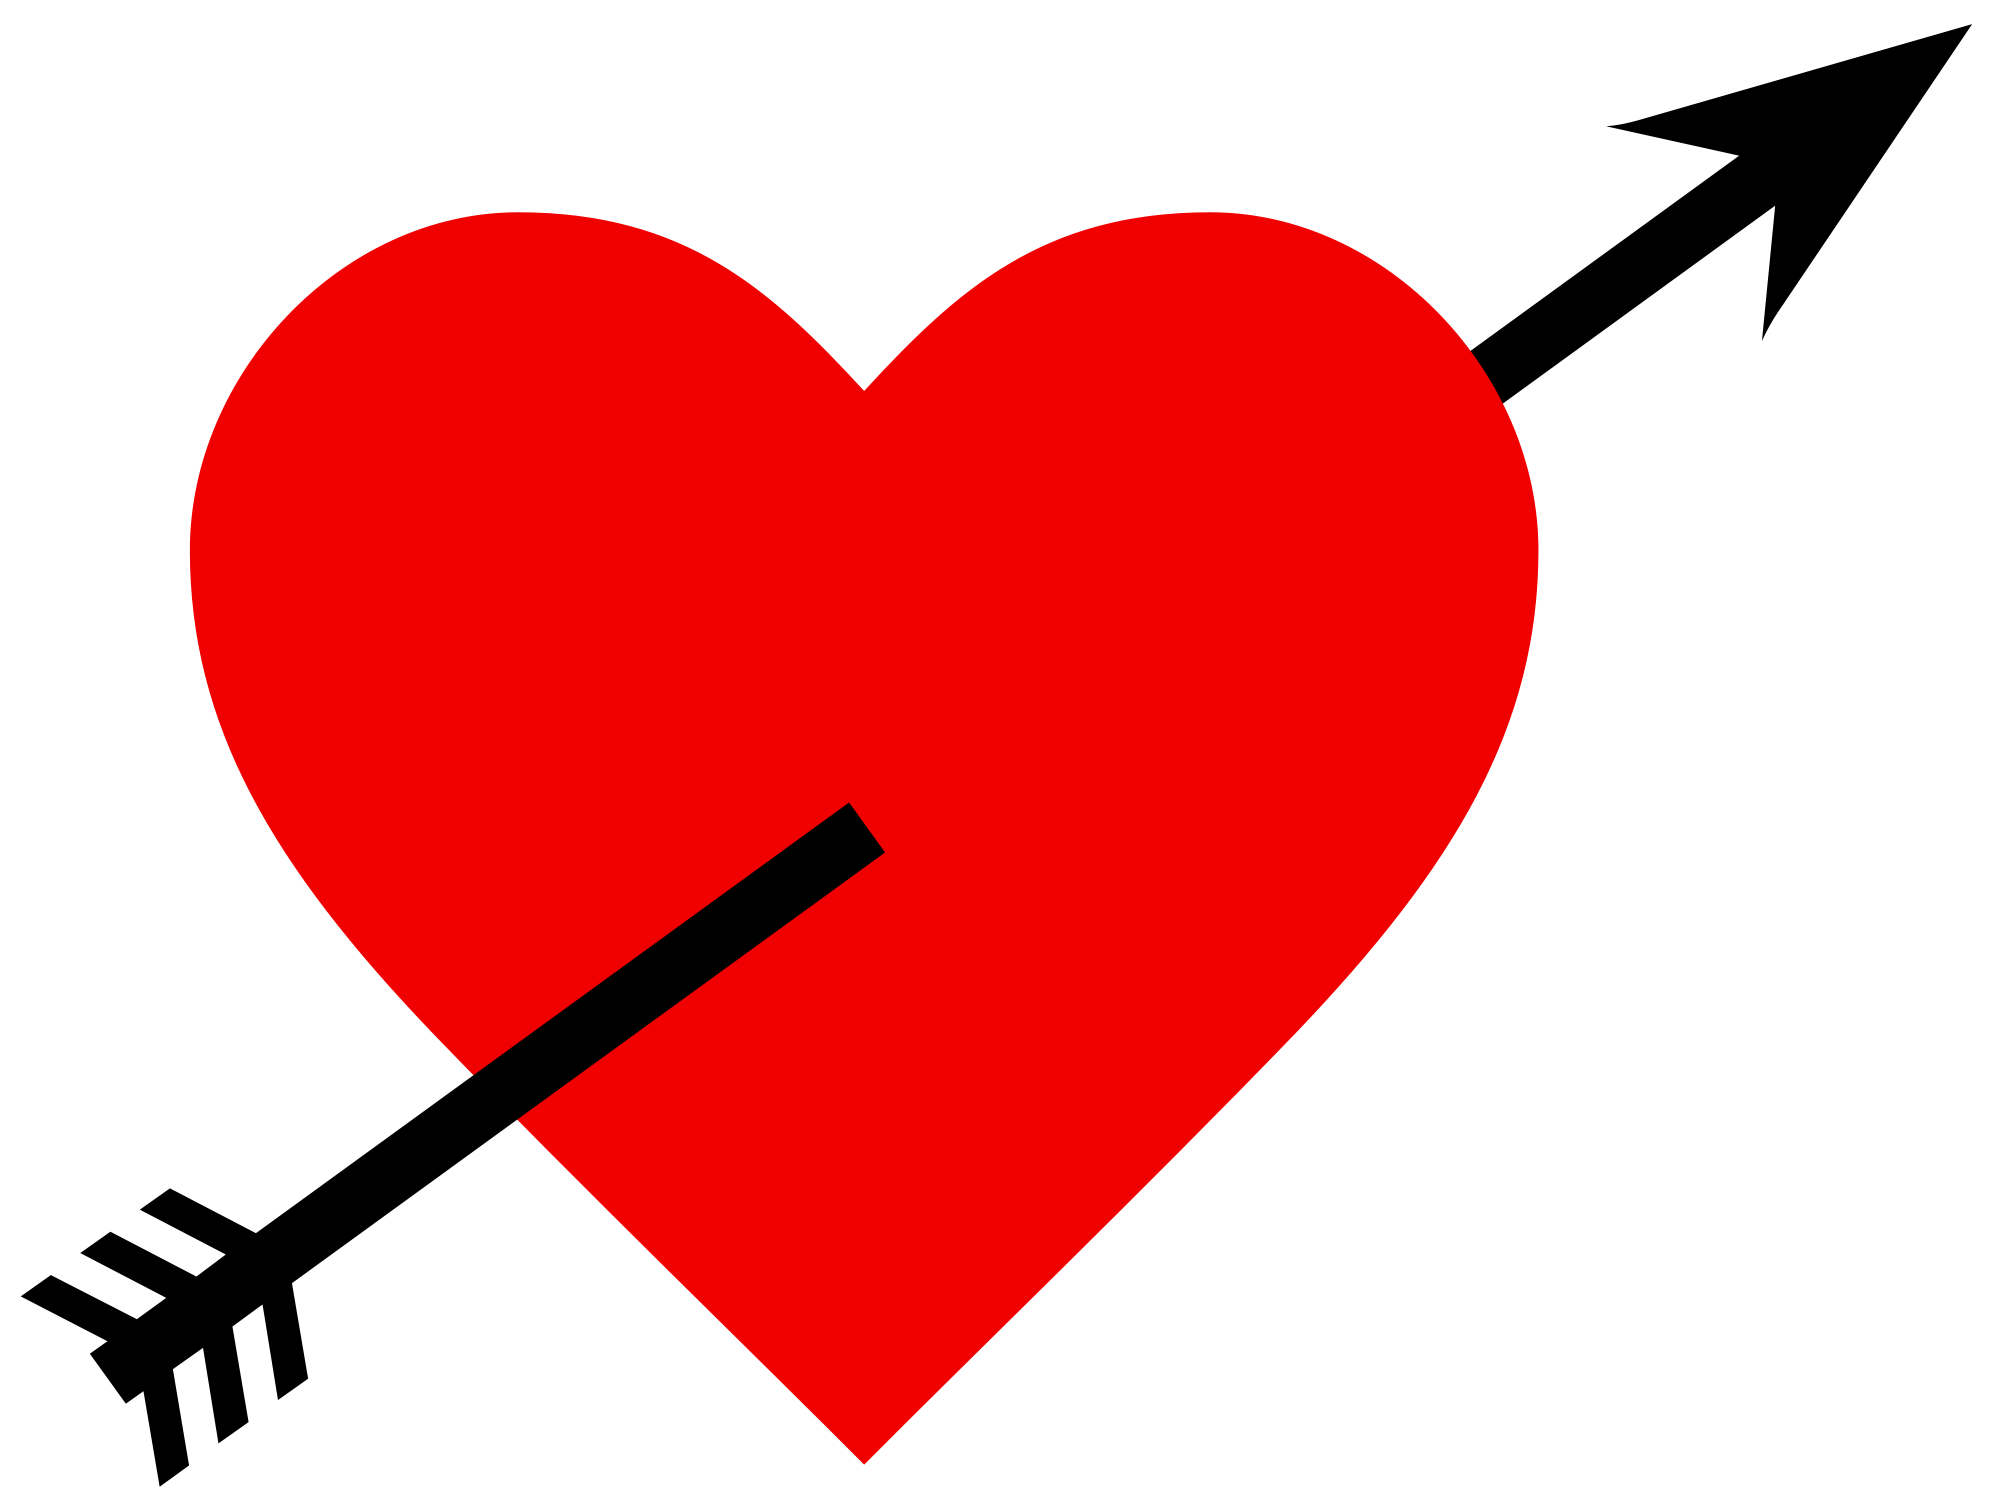 File:Love-heart-arrow - Wikimedia Commons